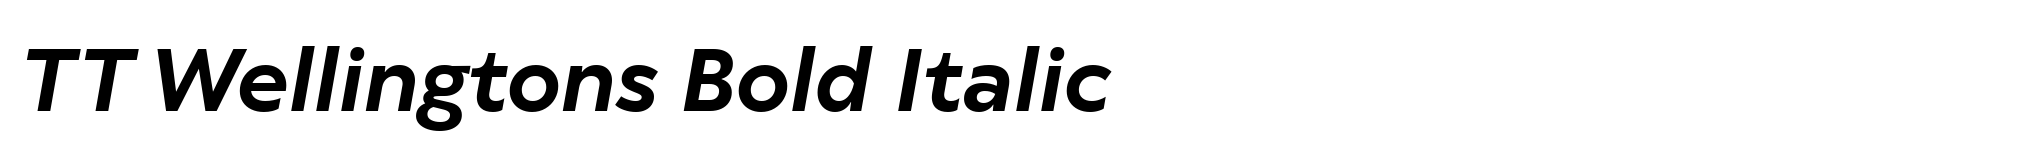 TT Wellingtons Bold Italic image